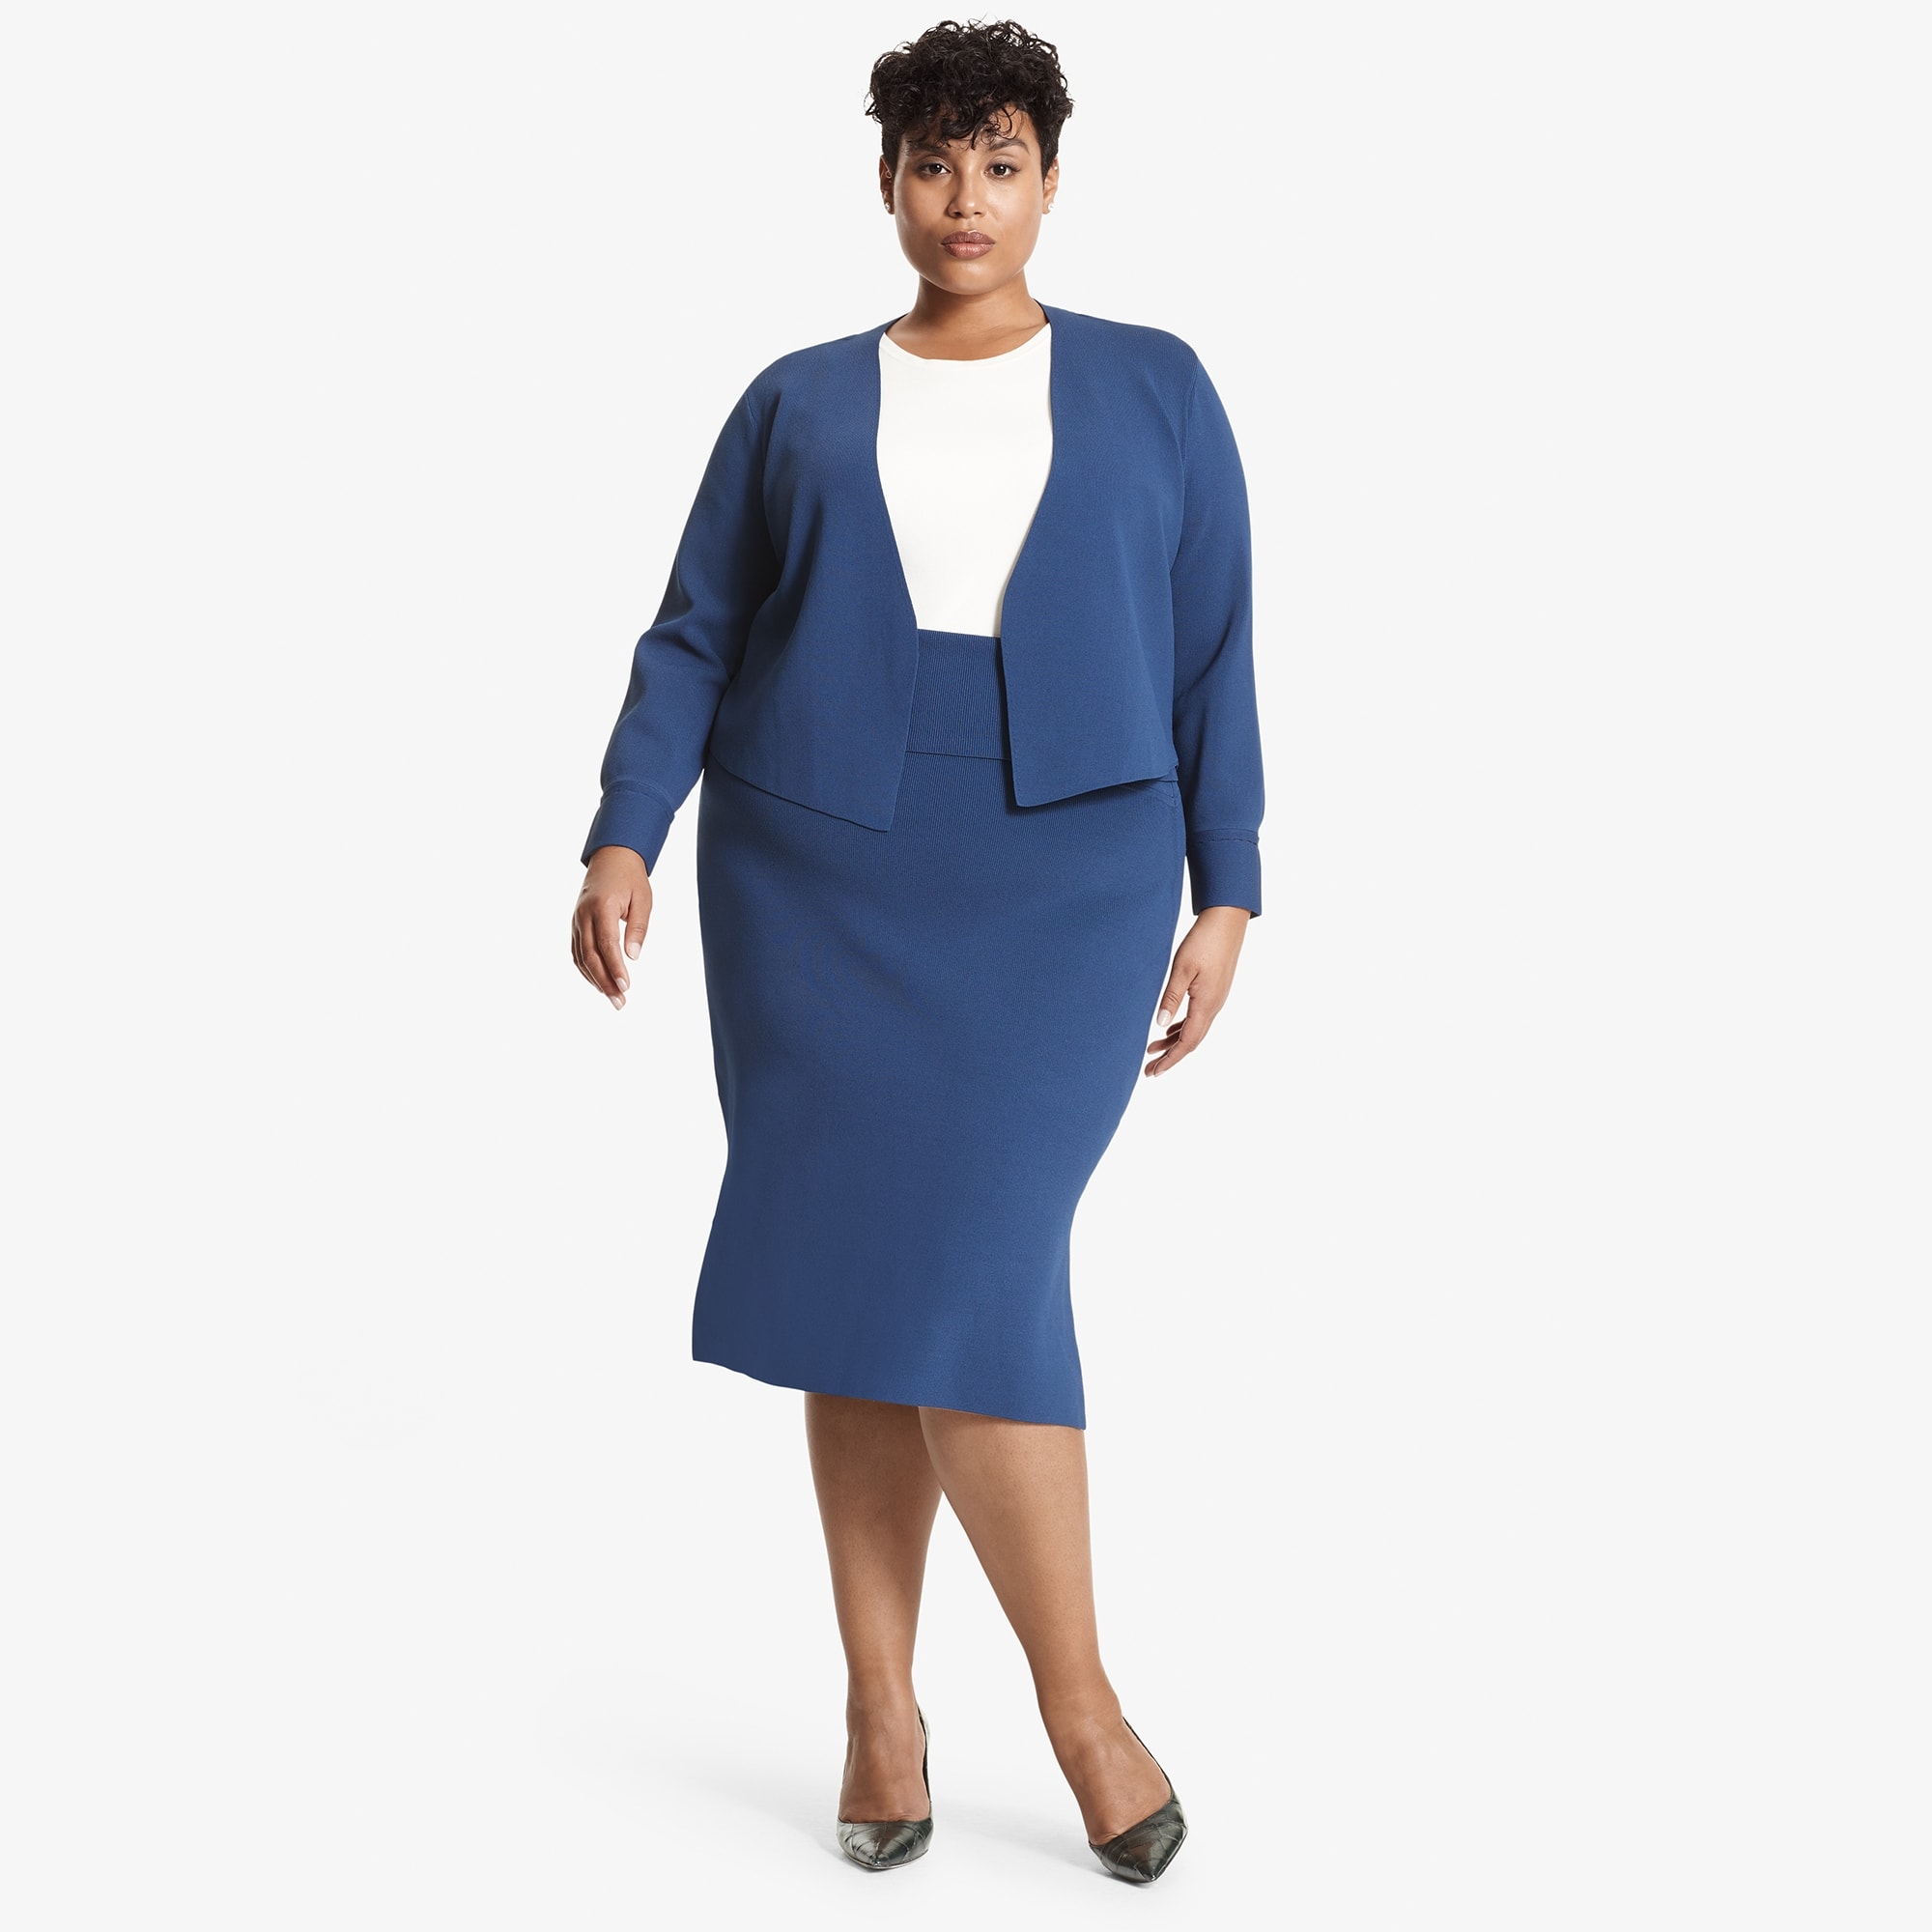 The Harlem Skirt—Jardigan Knit - Regent Blue | M.M.LaFleur